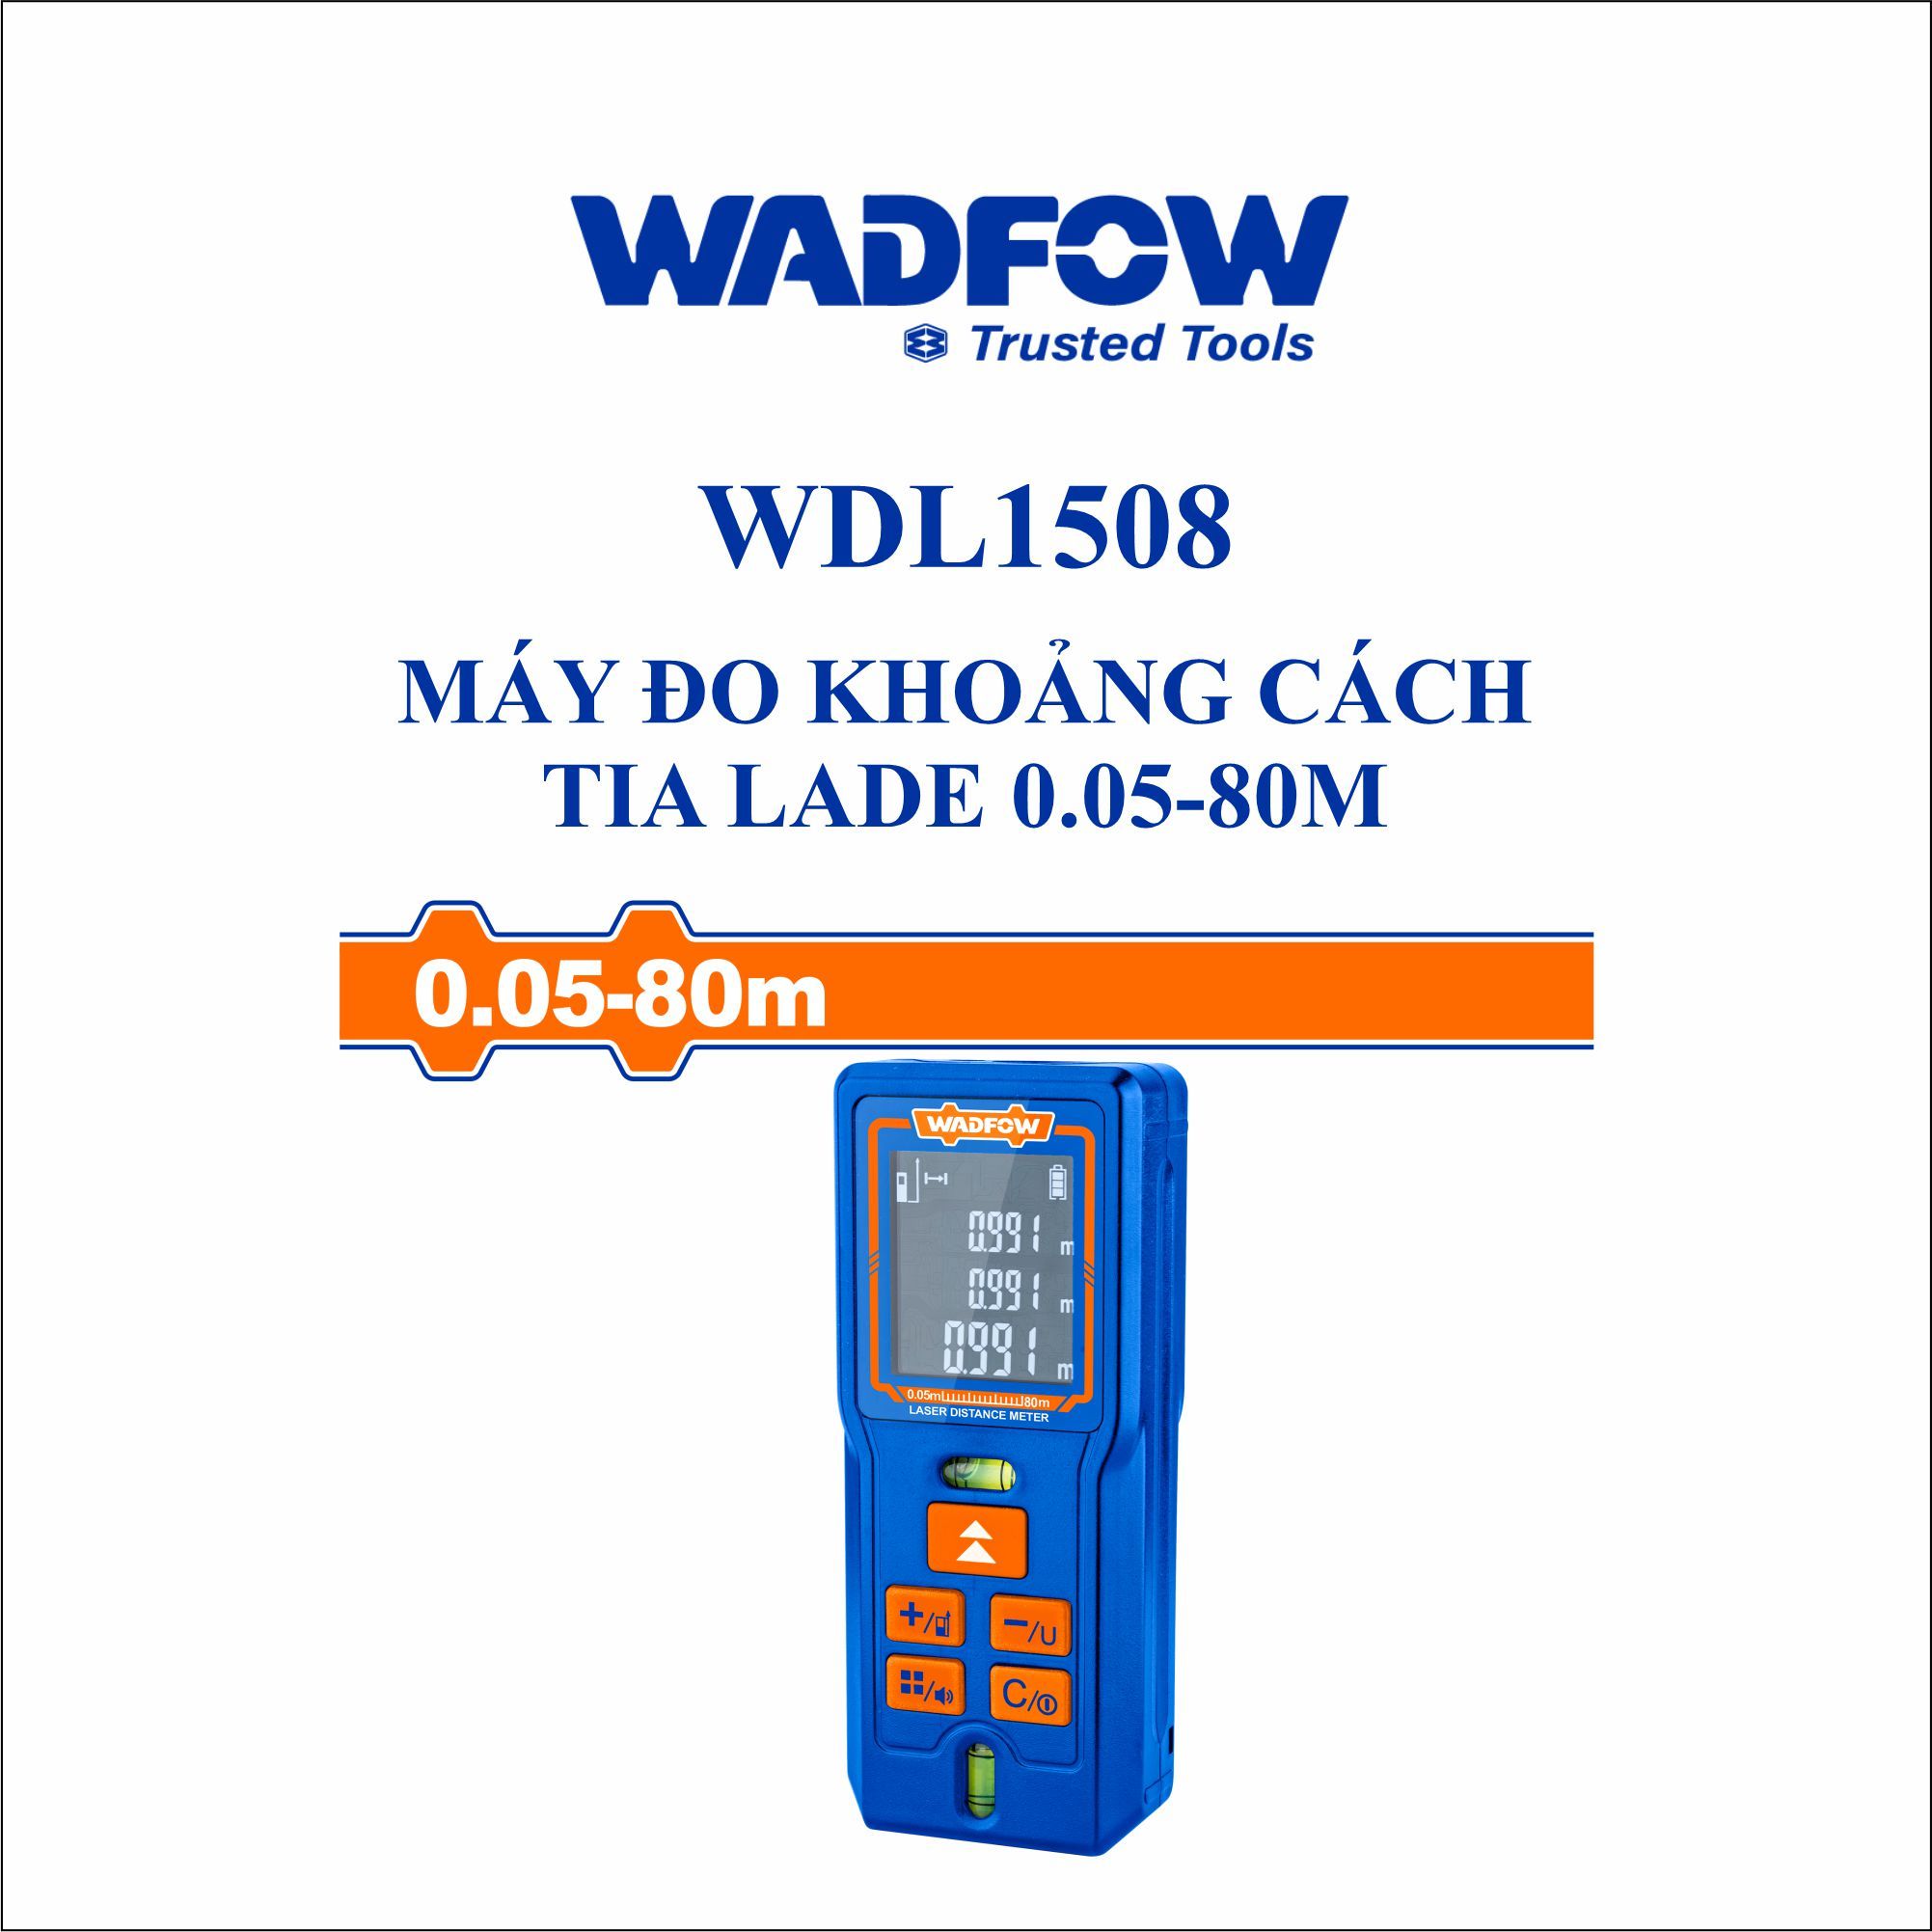  Máy đo khoảng cách tia lade 0.05-80m WADFOW WDL1508 